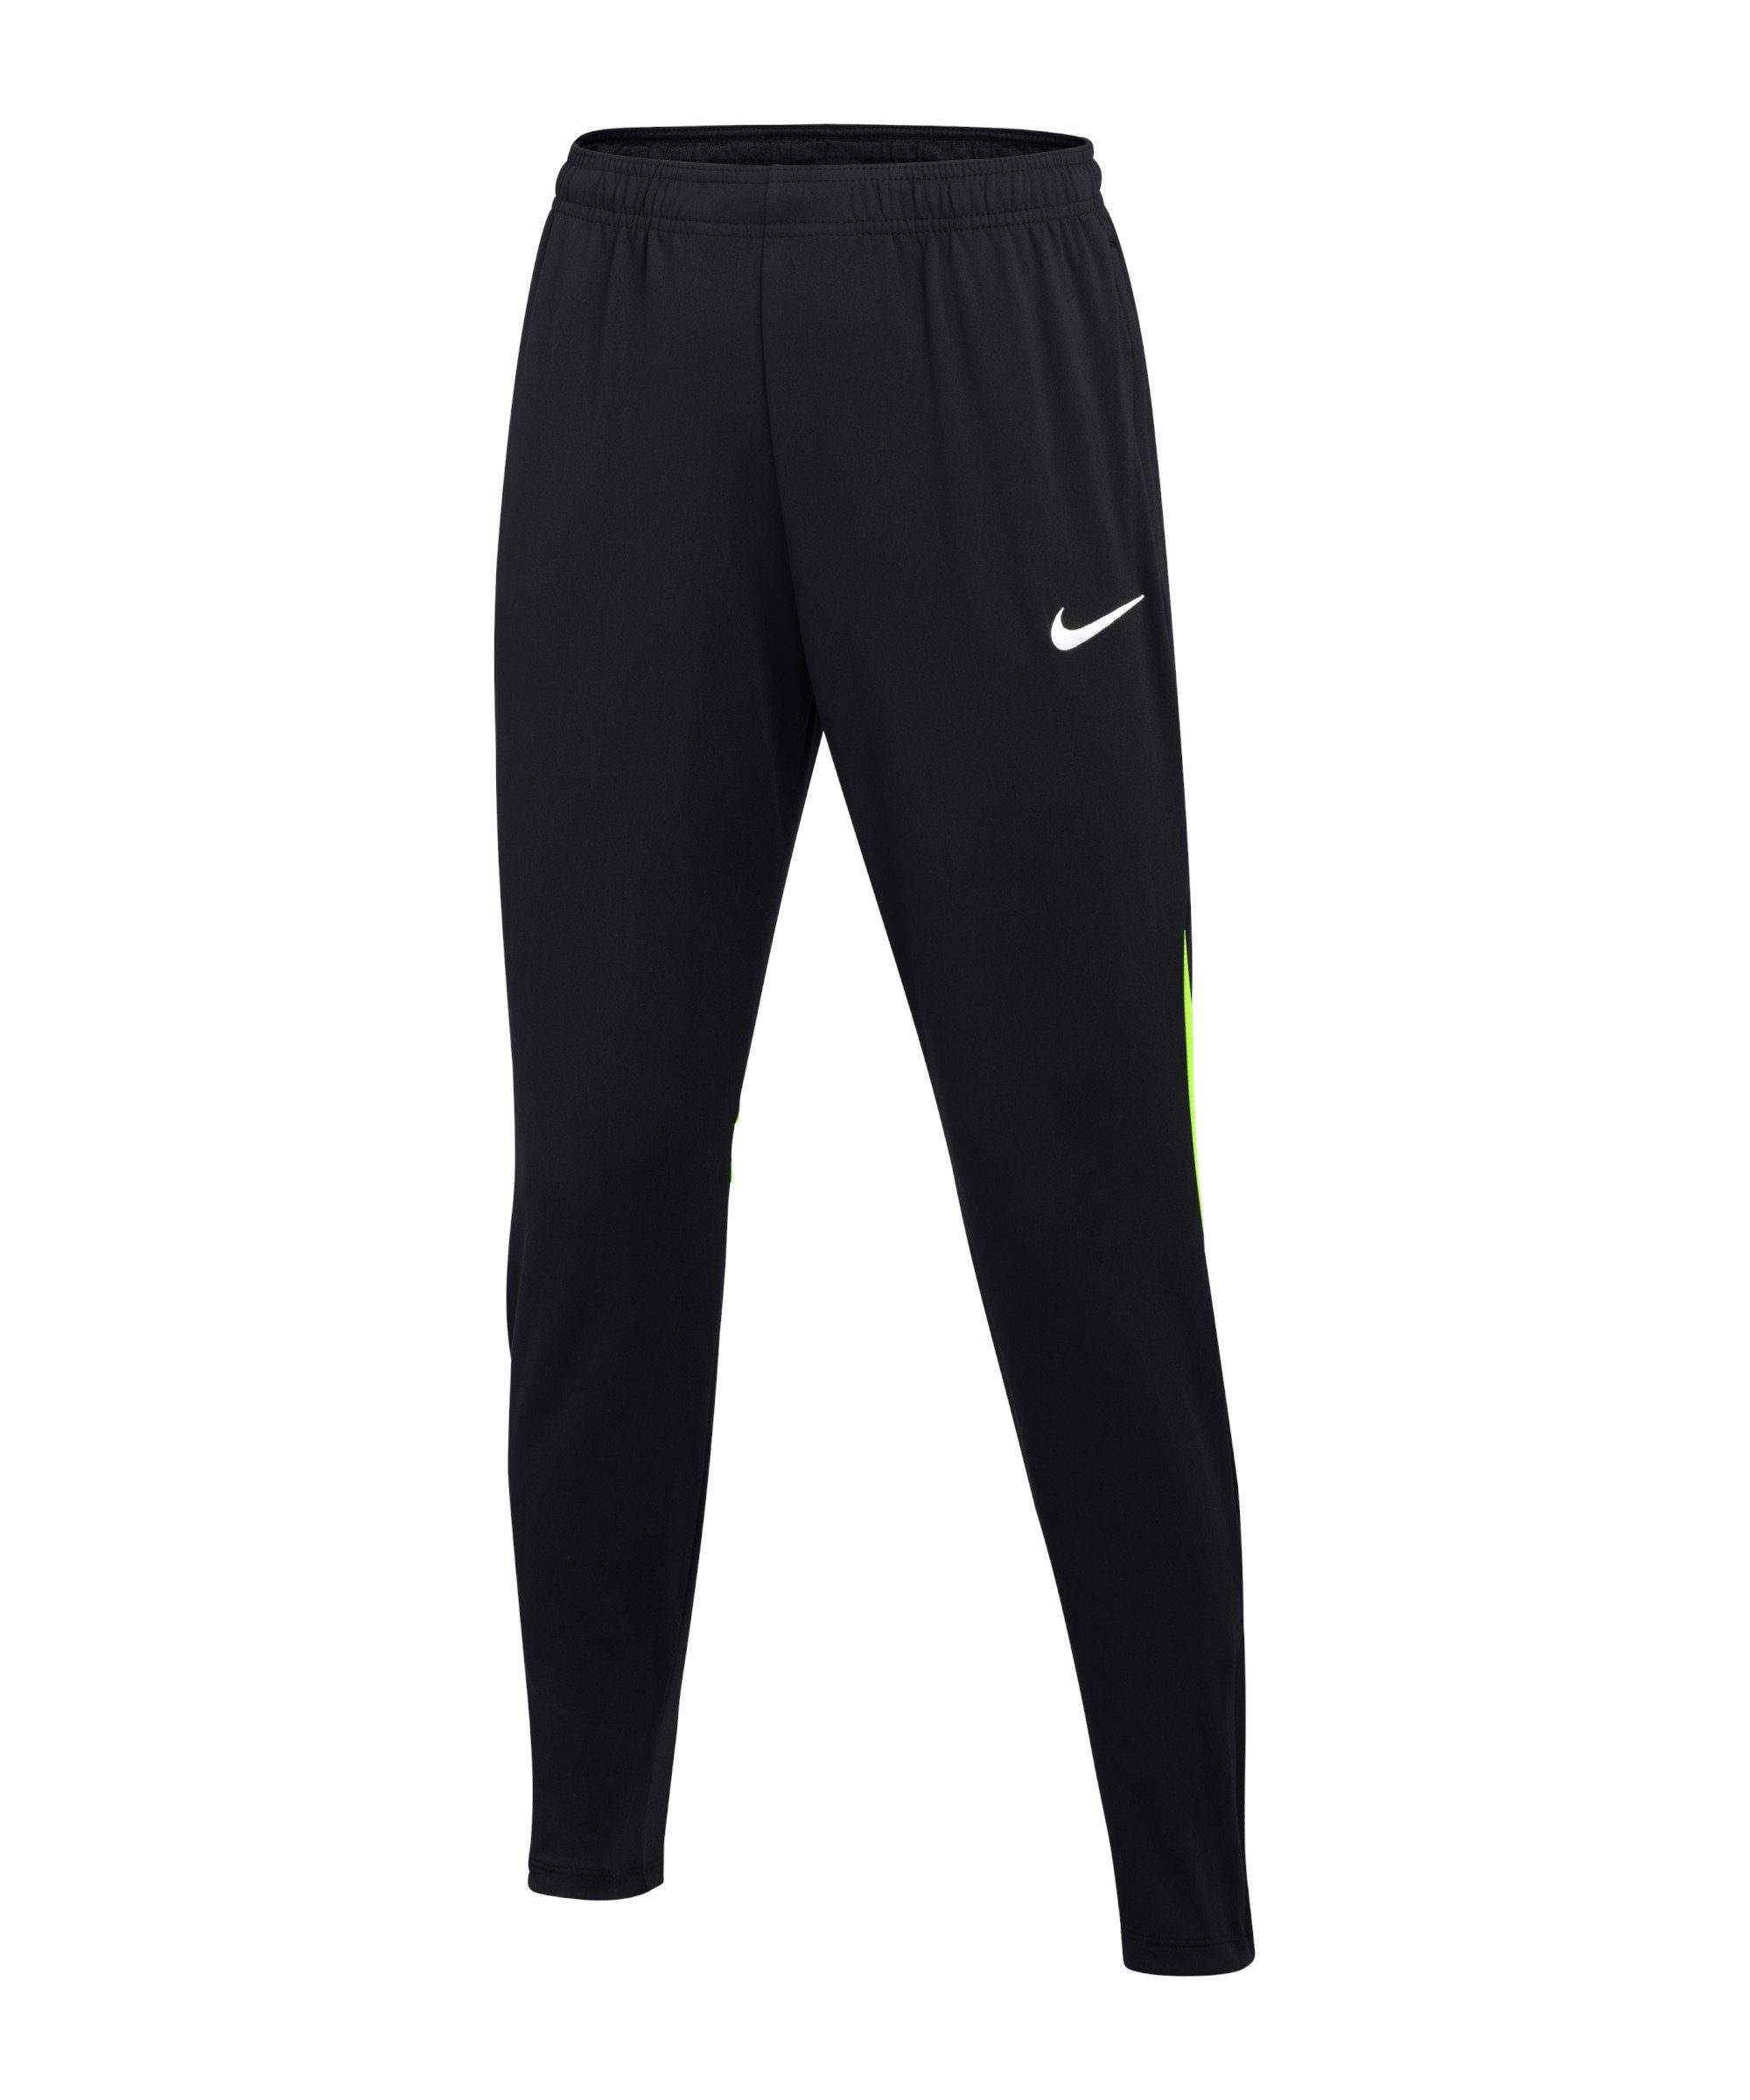 Nike Sporthosen Damen online kaufen | OTTO